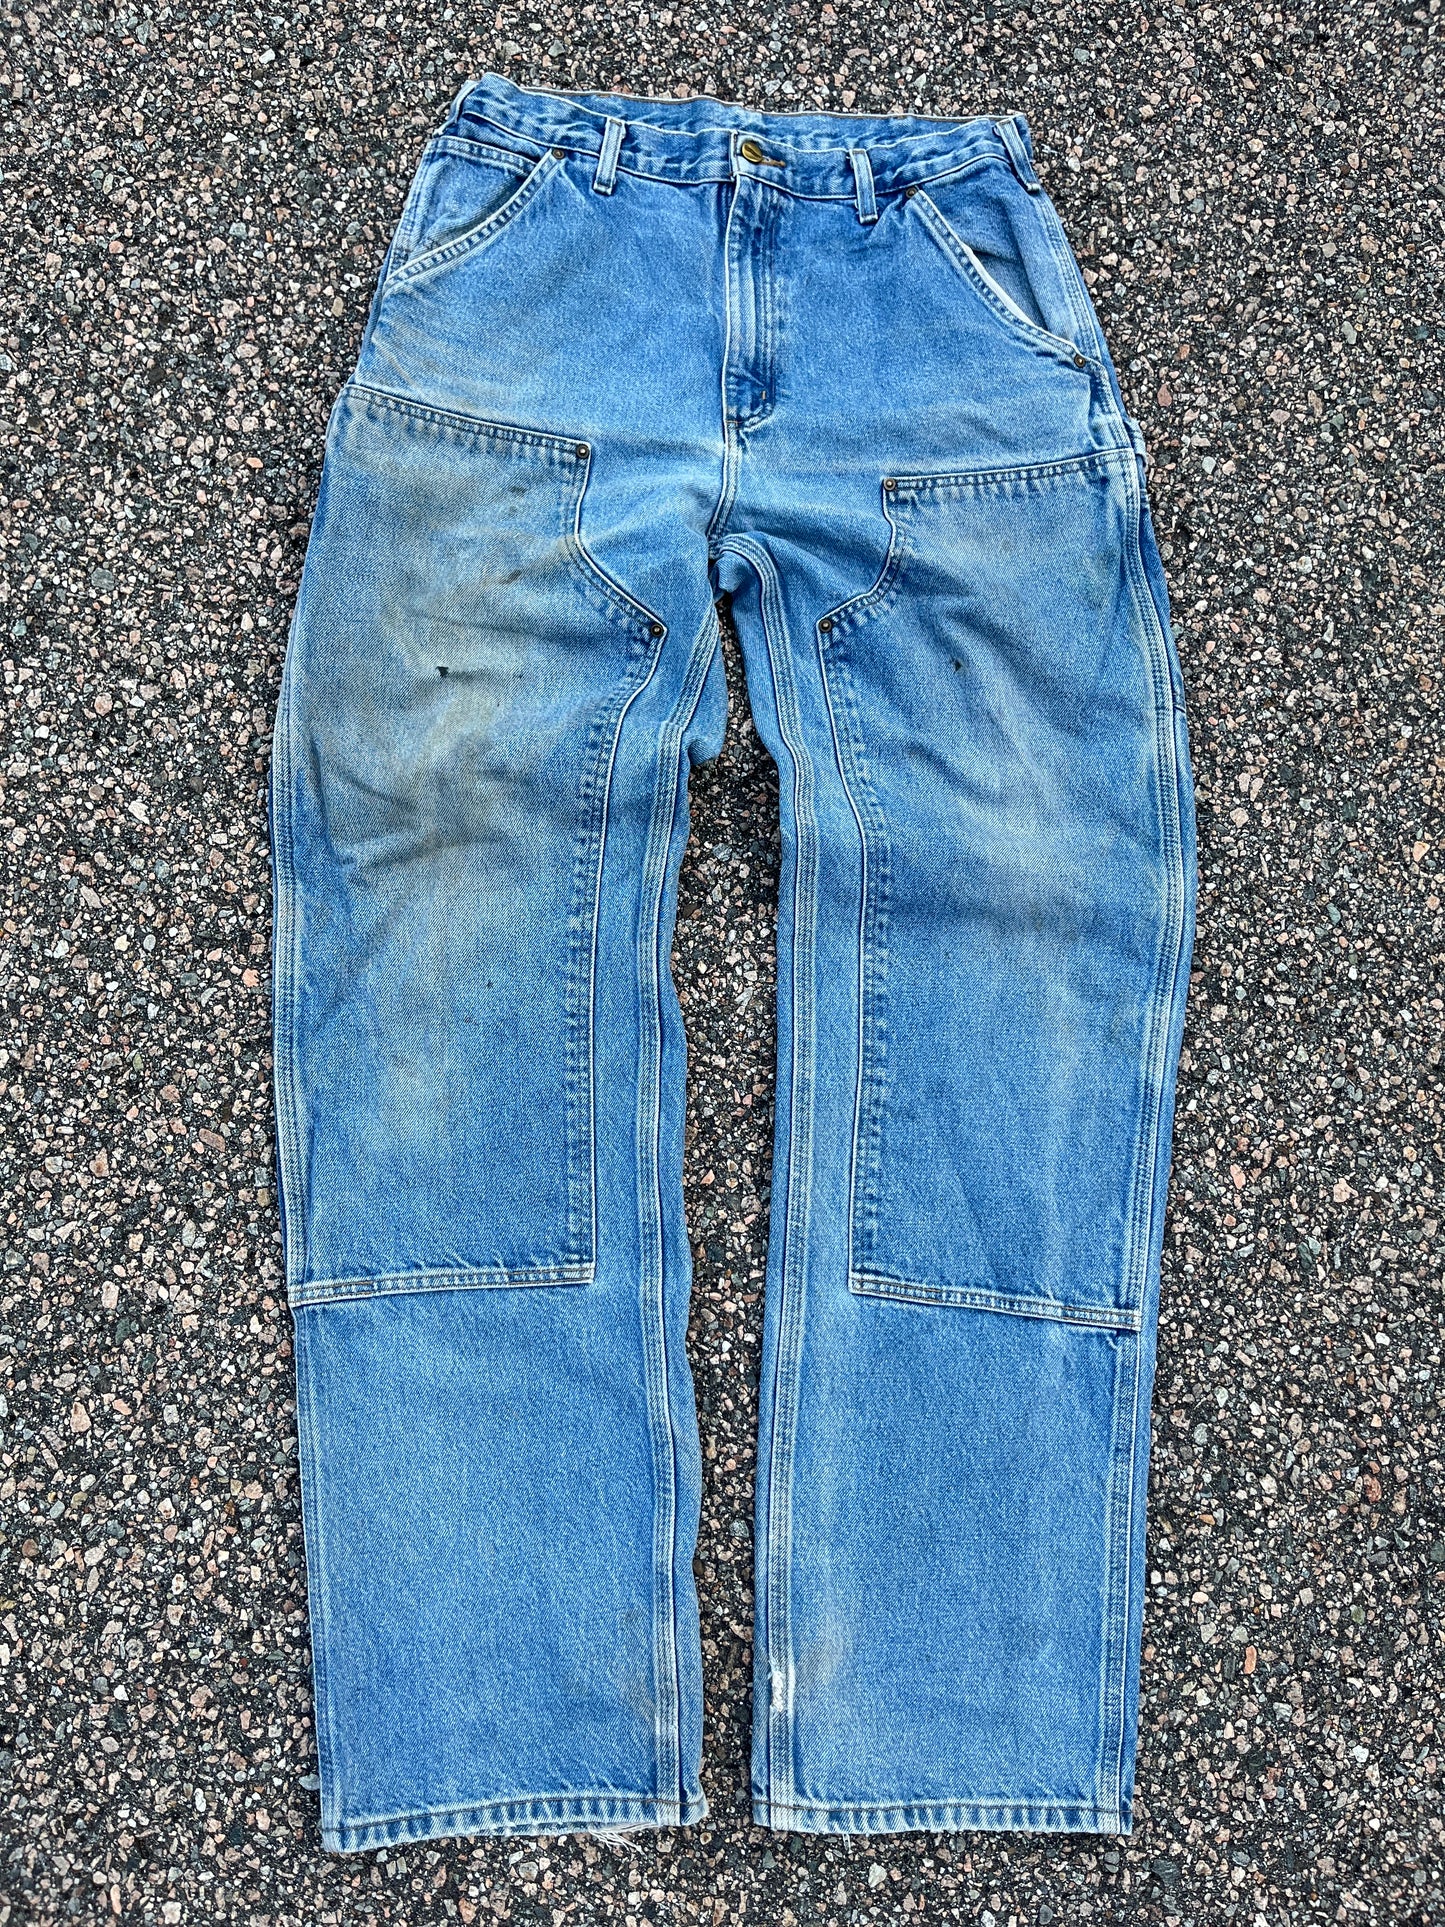 Faded Denim Carhartt Double Knee Pants - 32 x 34.5